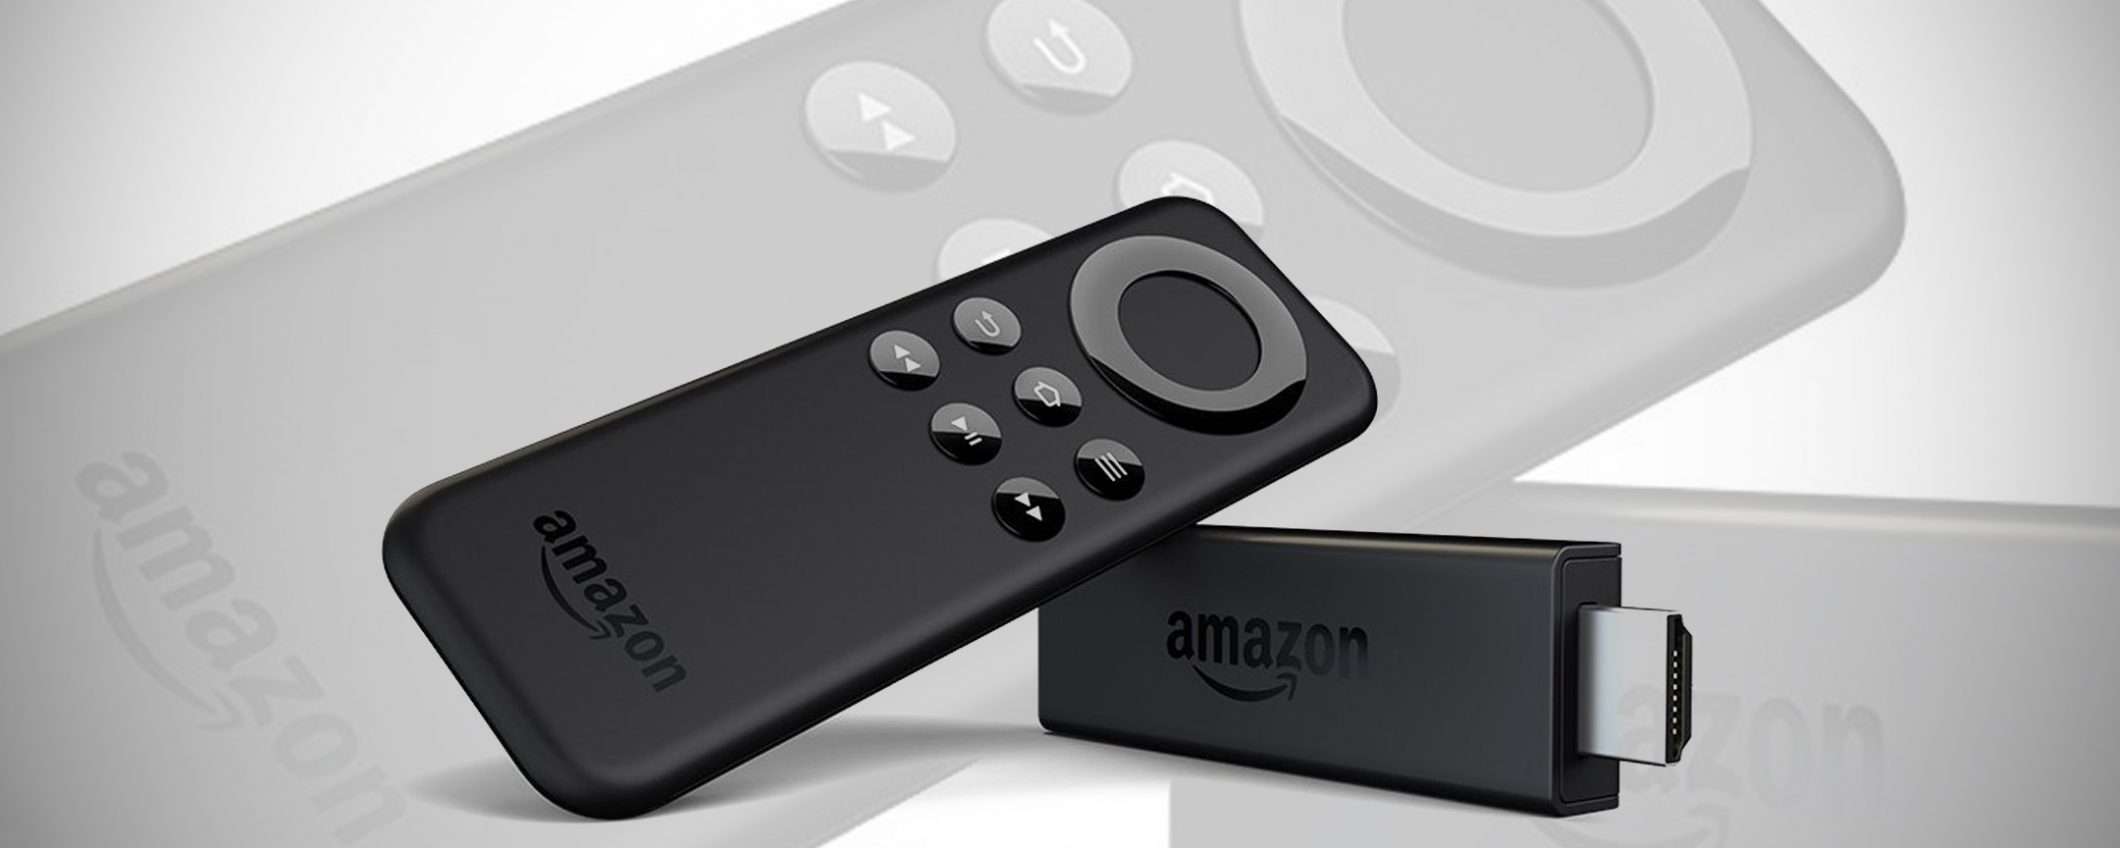 Amazon Fire TV Stick in offerta a 24,99 euro